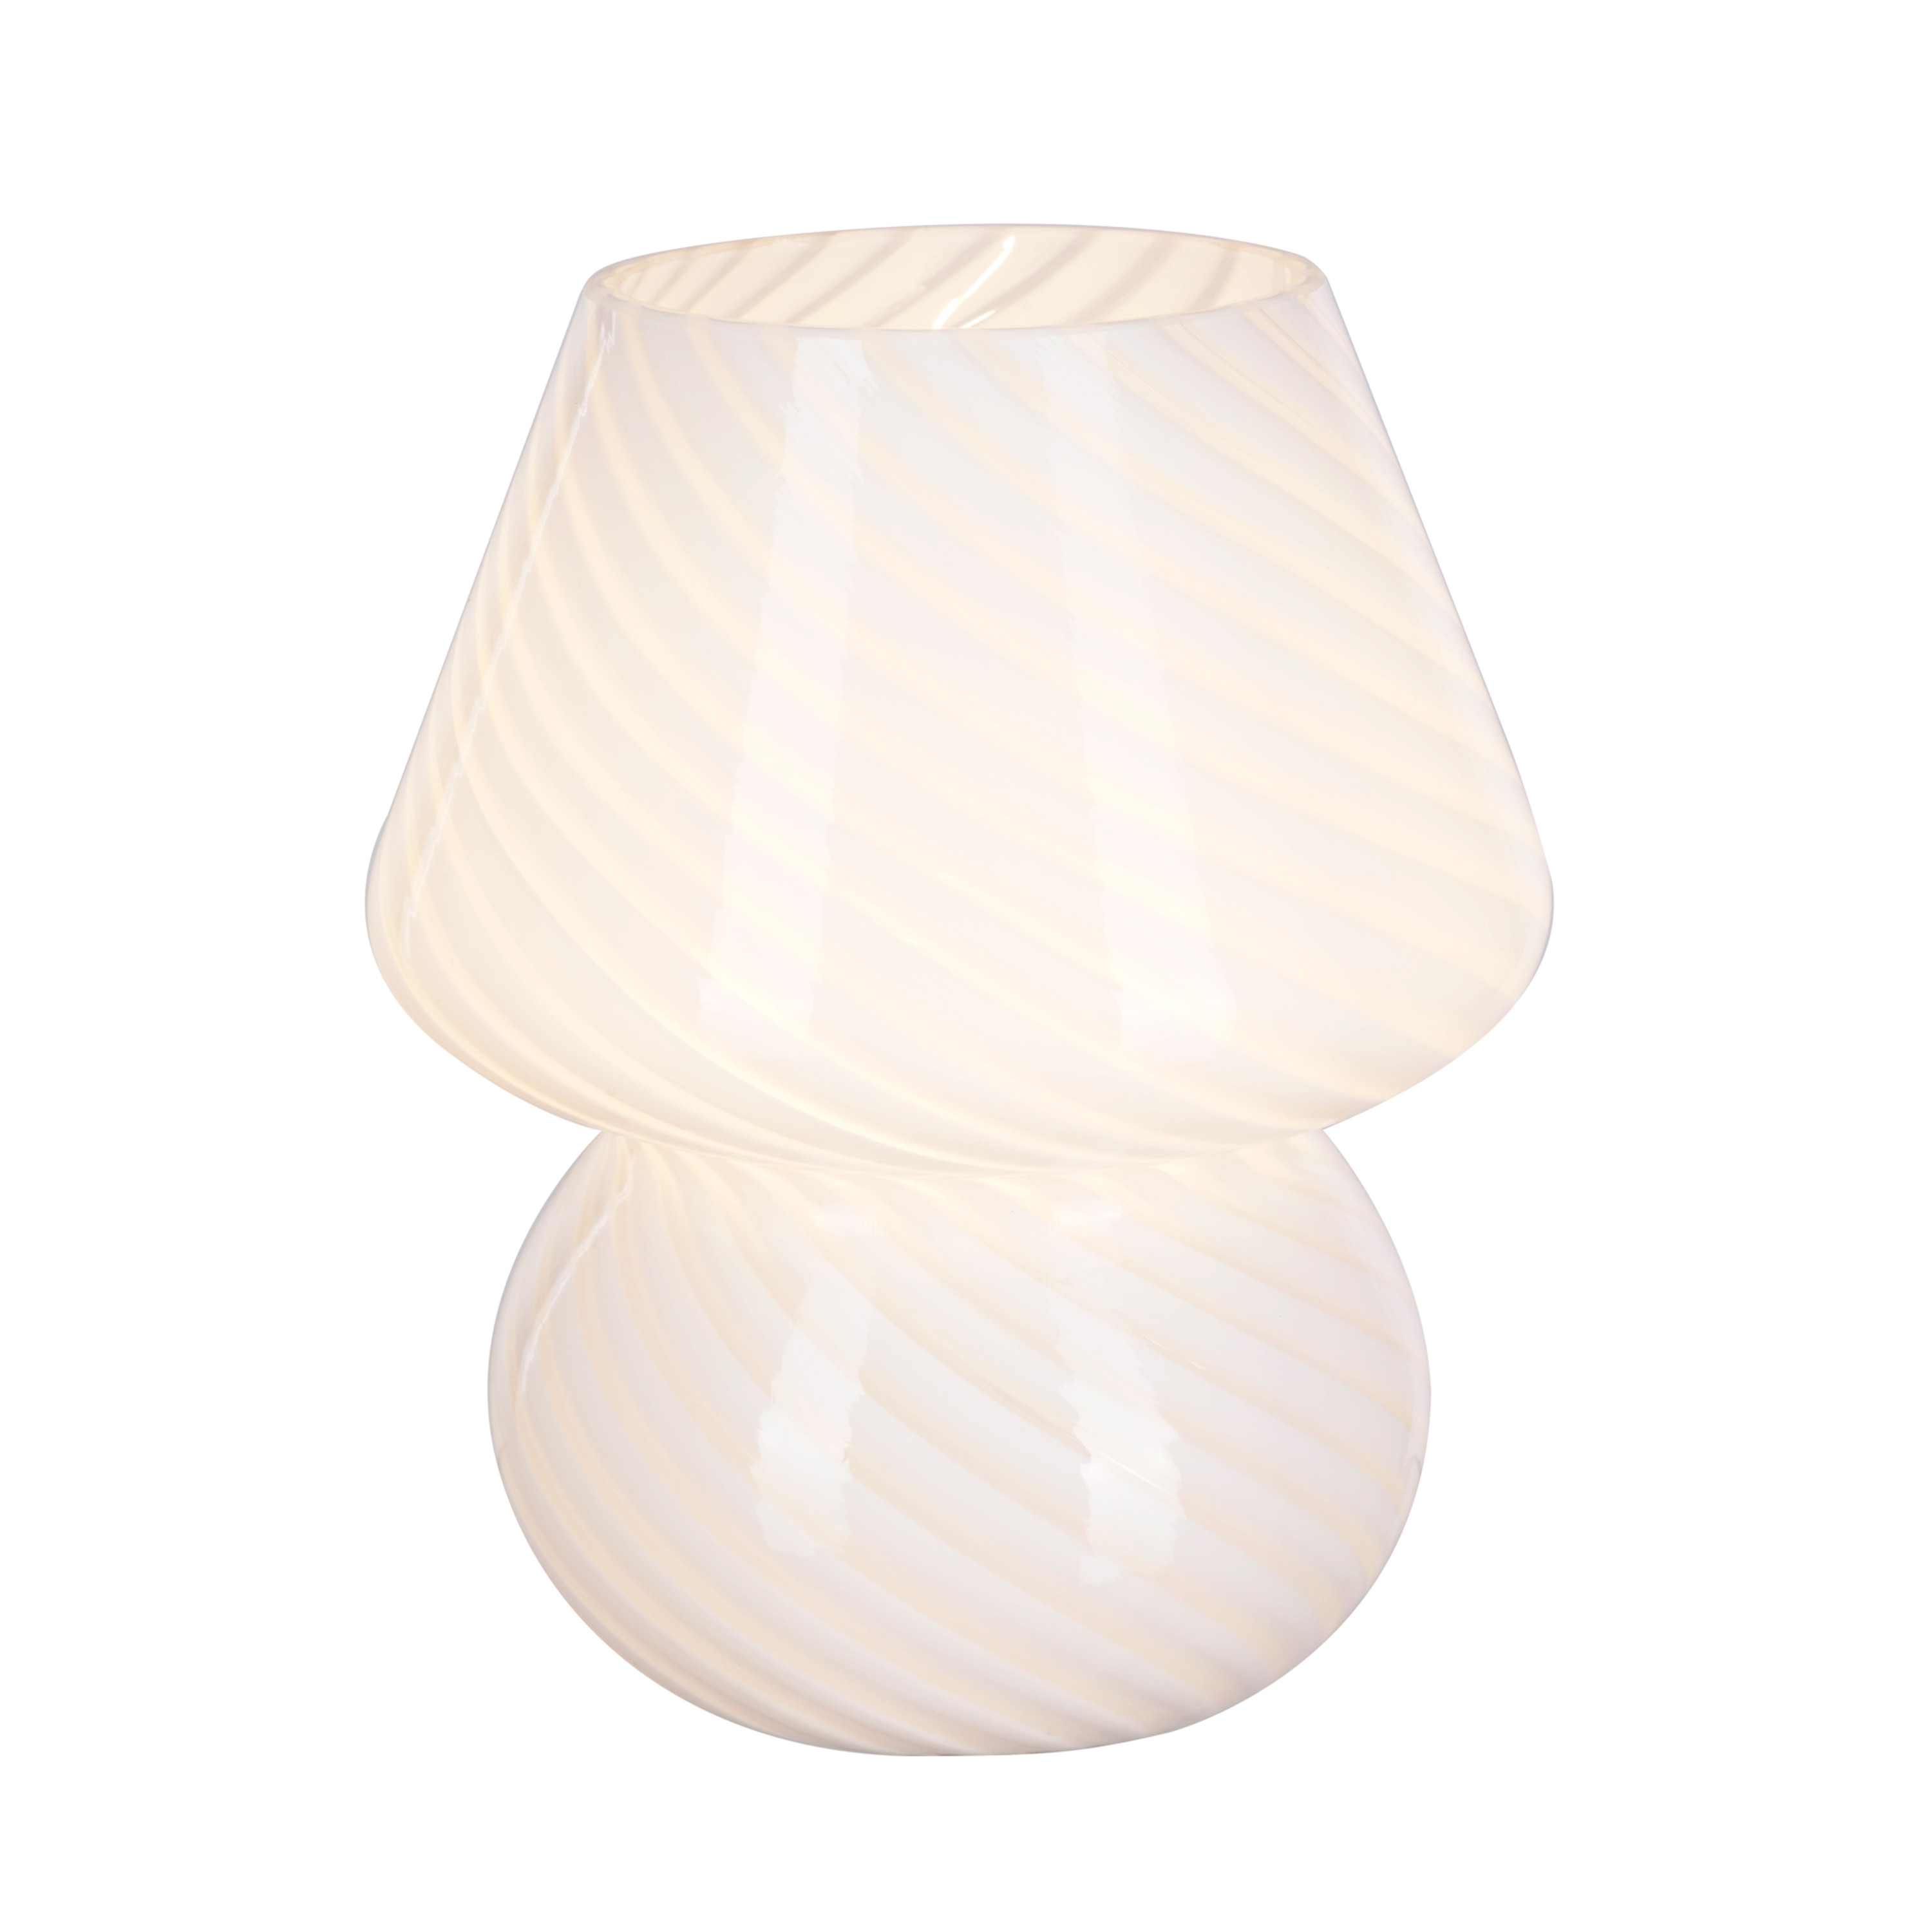 8" Glass Mushroom Lamp, White Stripe, Glossy Finish - image 8 of 12